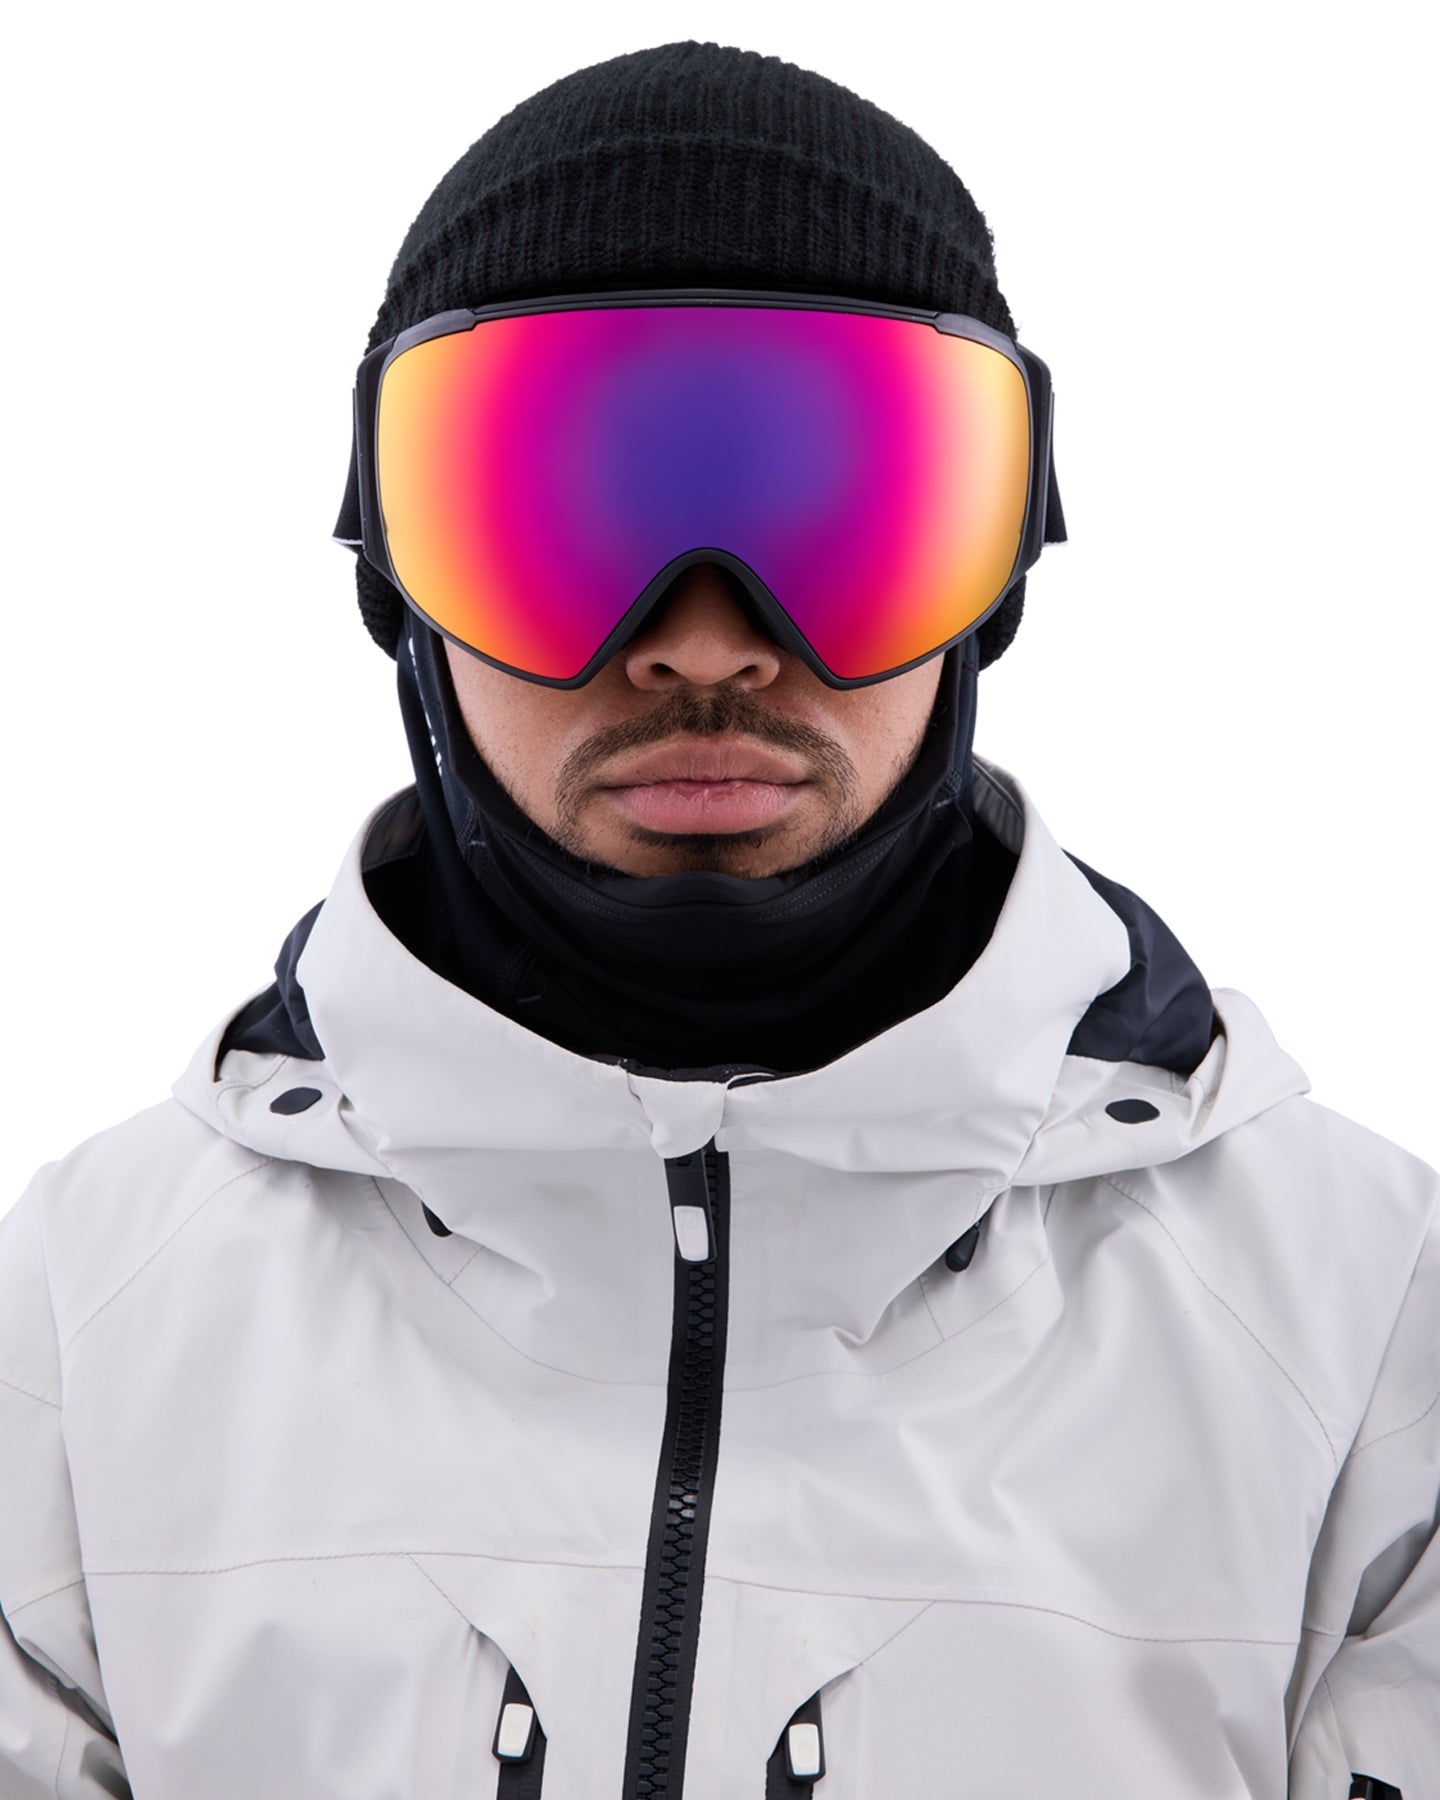 Anon M4S Toric Low Bridge Fit Snow Goggles + Bonus Lens + MFI - Black / Perceive Sunny Red Men's Snow Goggles - SnowSkiersWarehouse